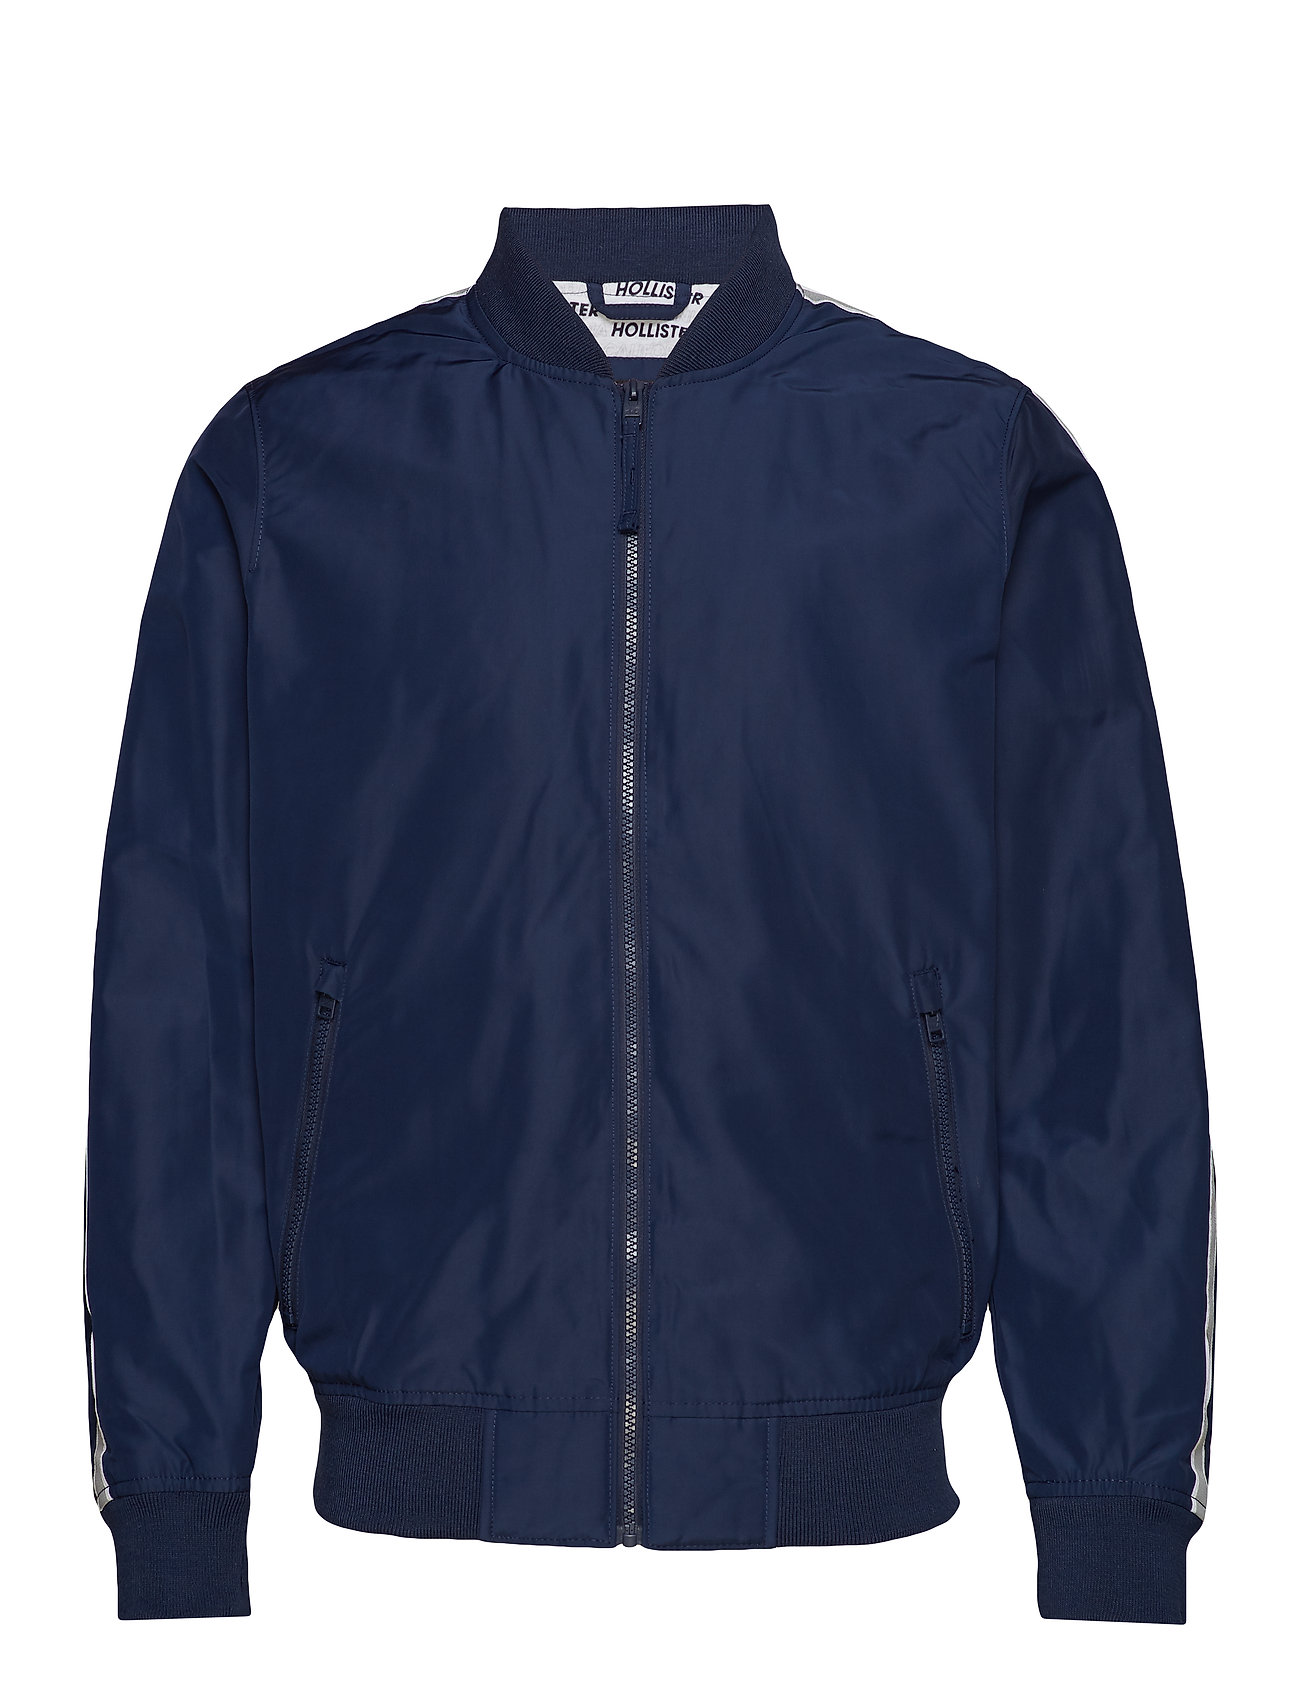 hollister navy blue jacket